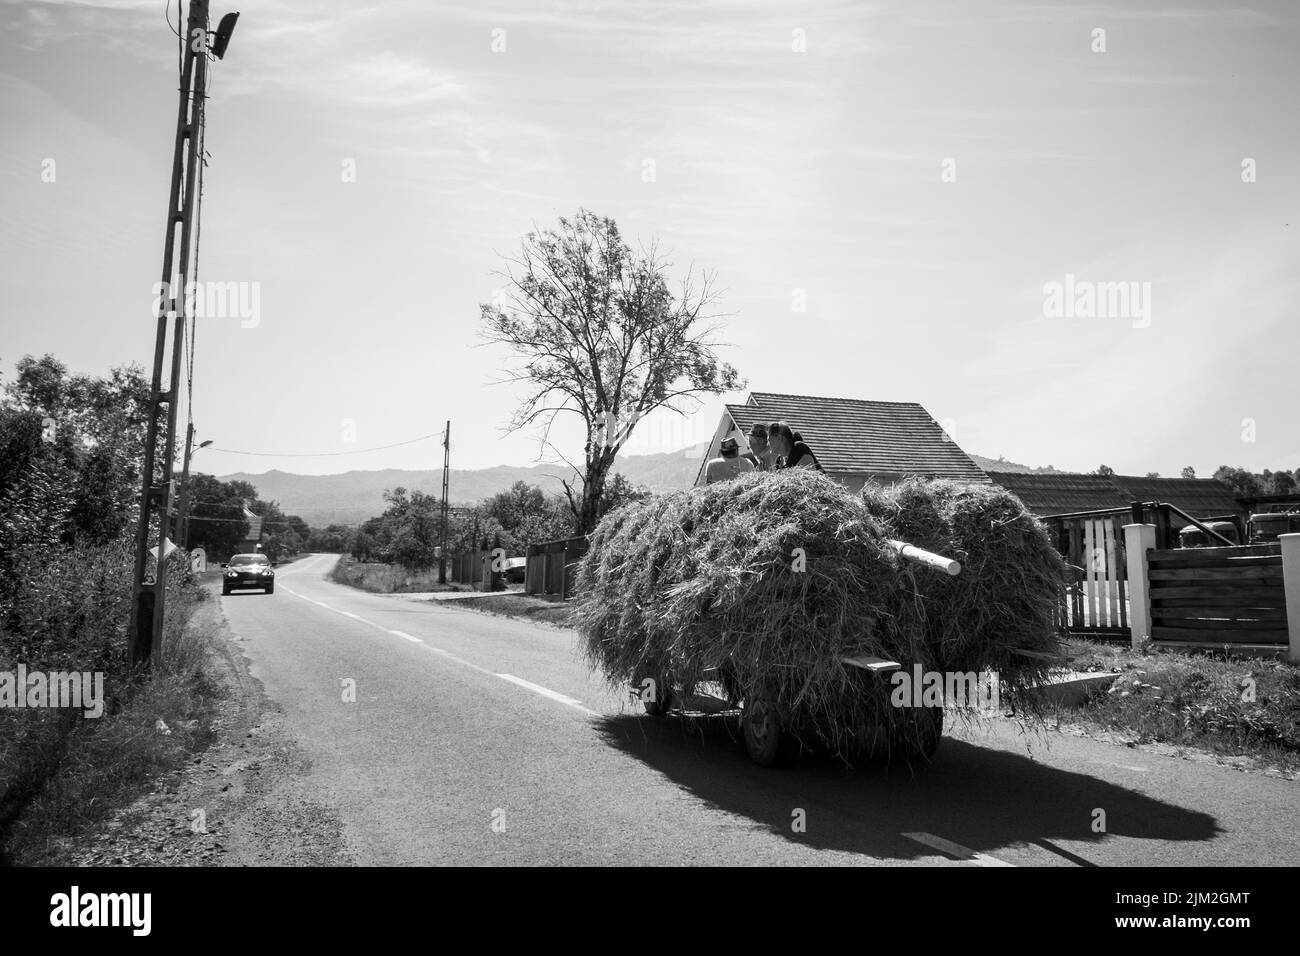 Romania, Transylvania, Dorolea, daily life in the countryside Stock Photo